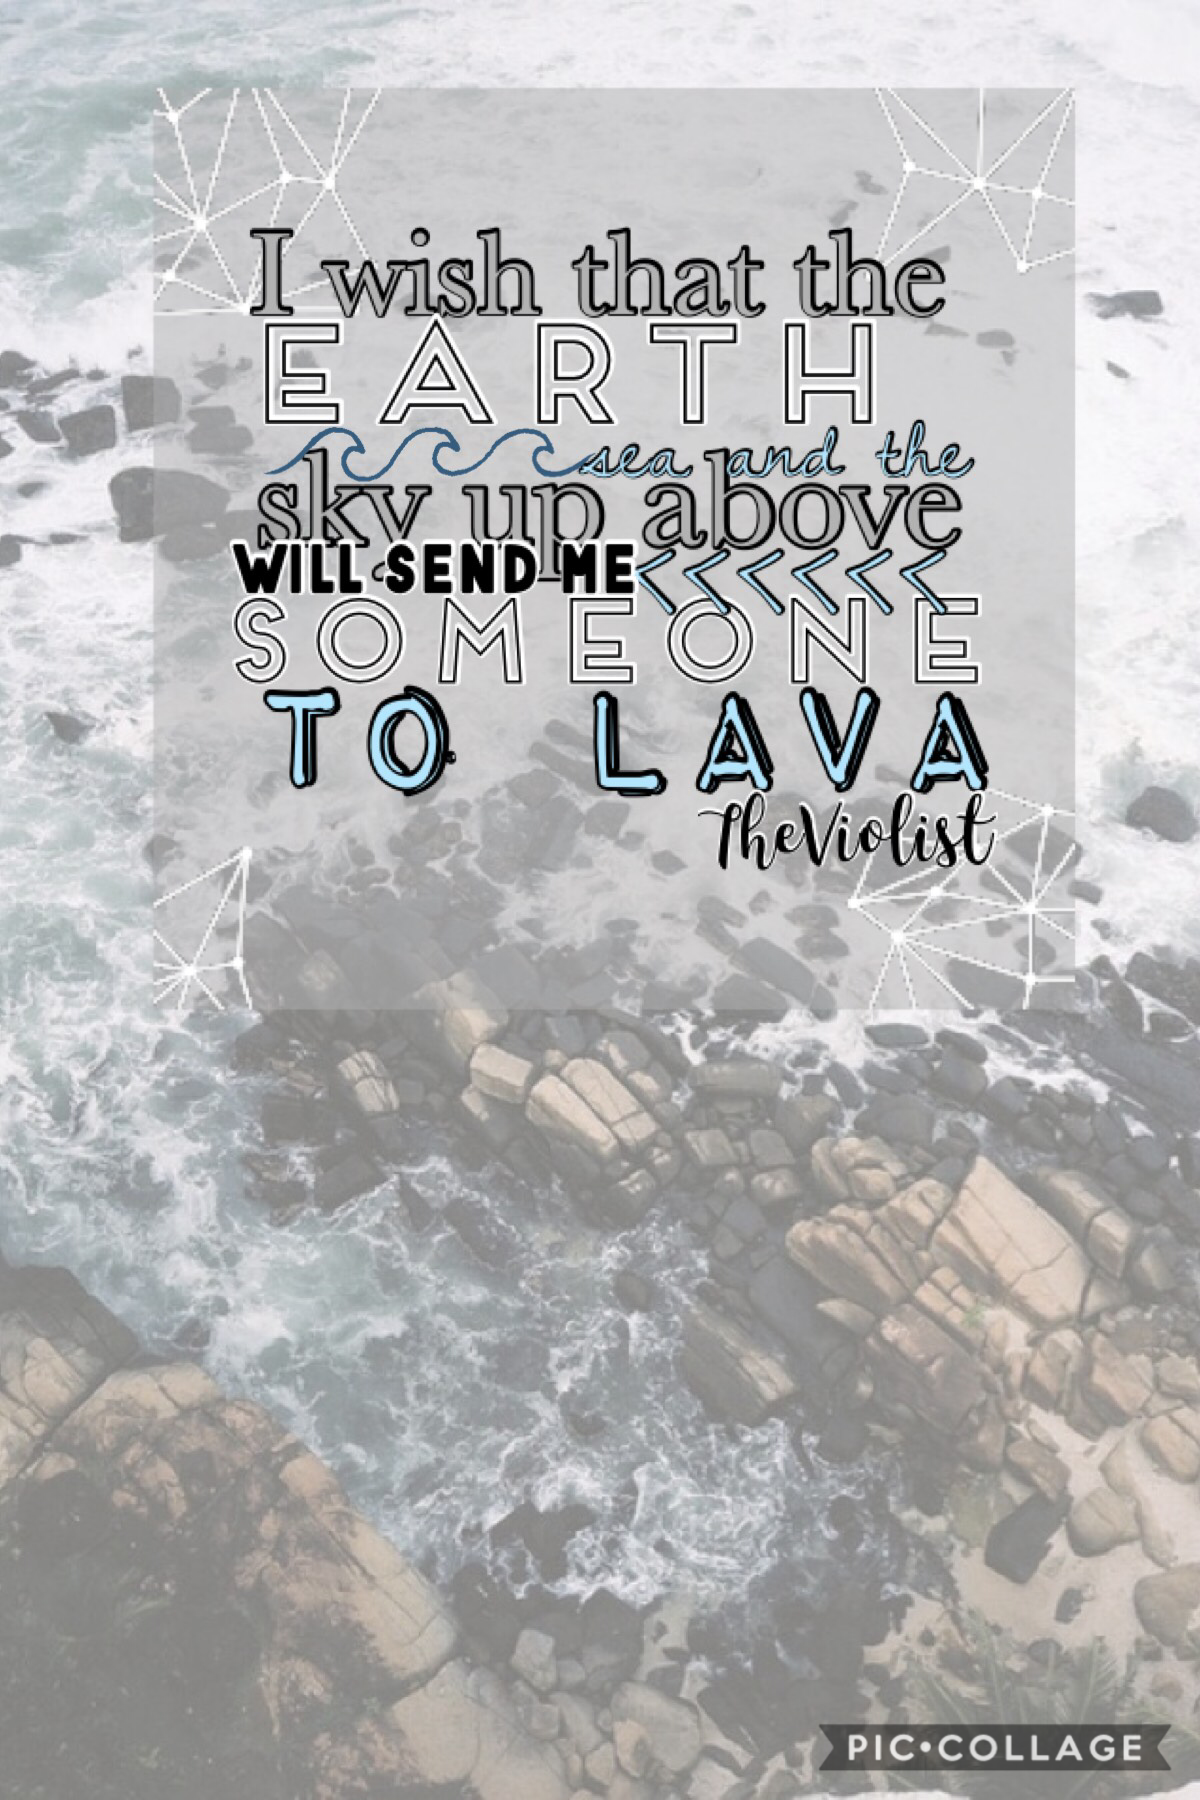 🌋Tap🌋

I 

Lava 

You